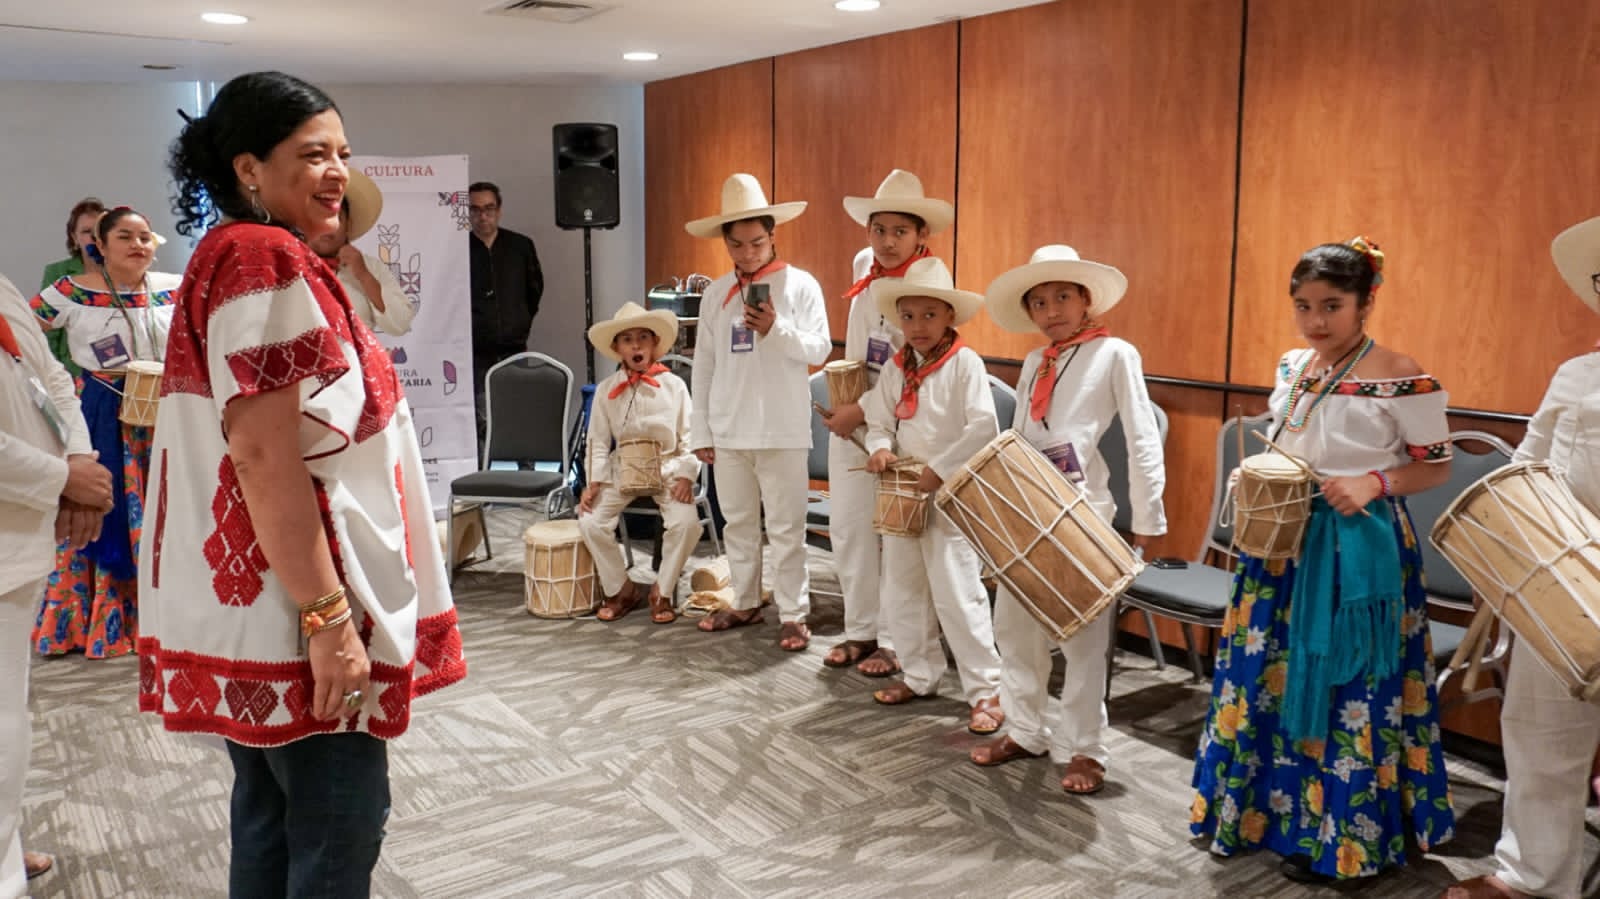 SC entrega instrumentos a tamborileros de Guaytalpa, Tabasco